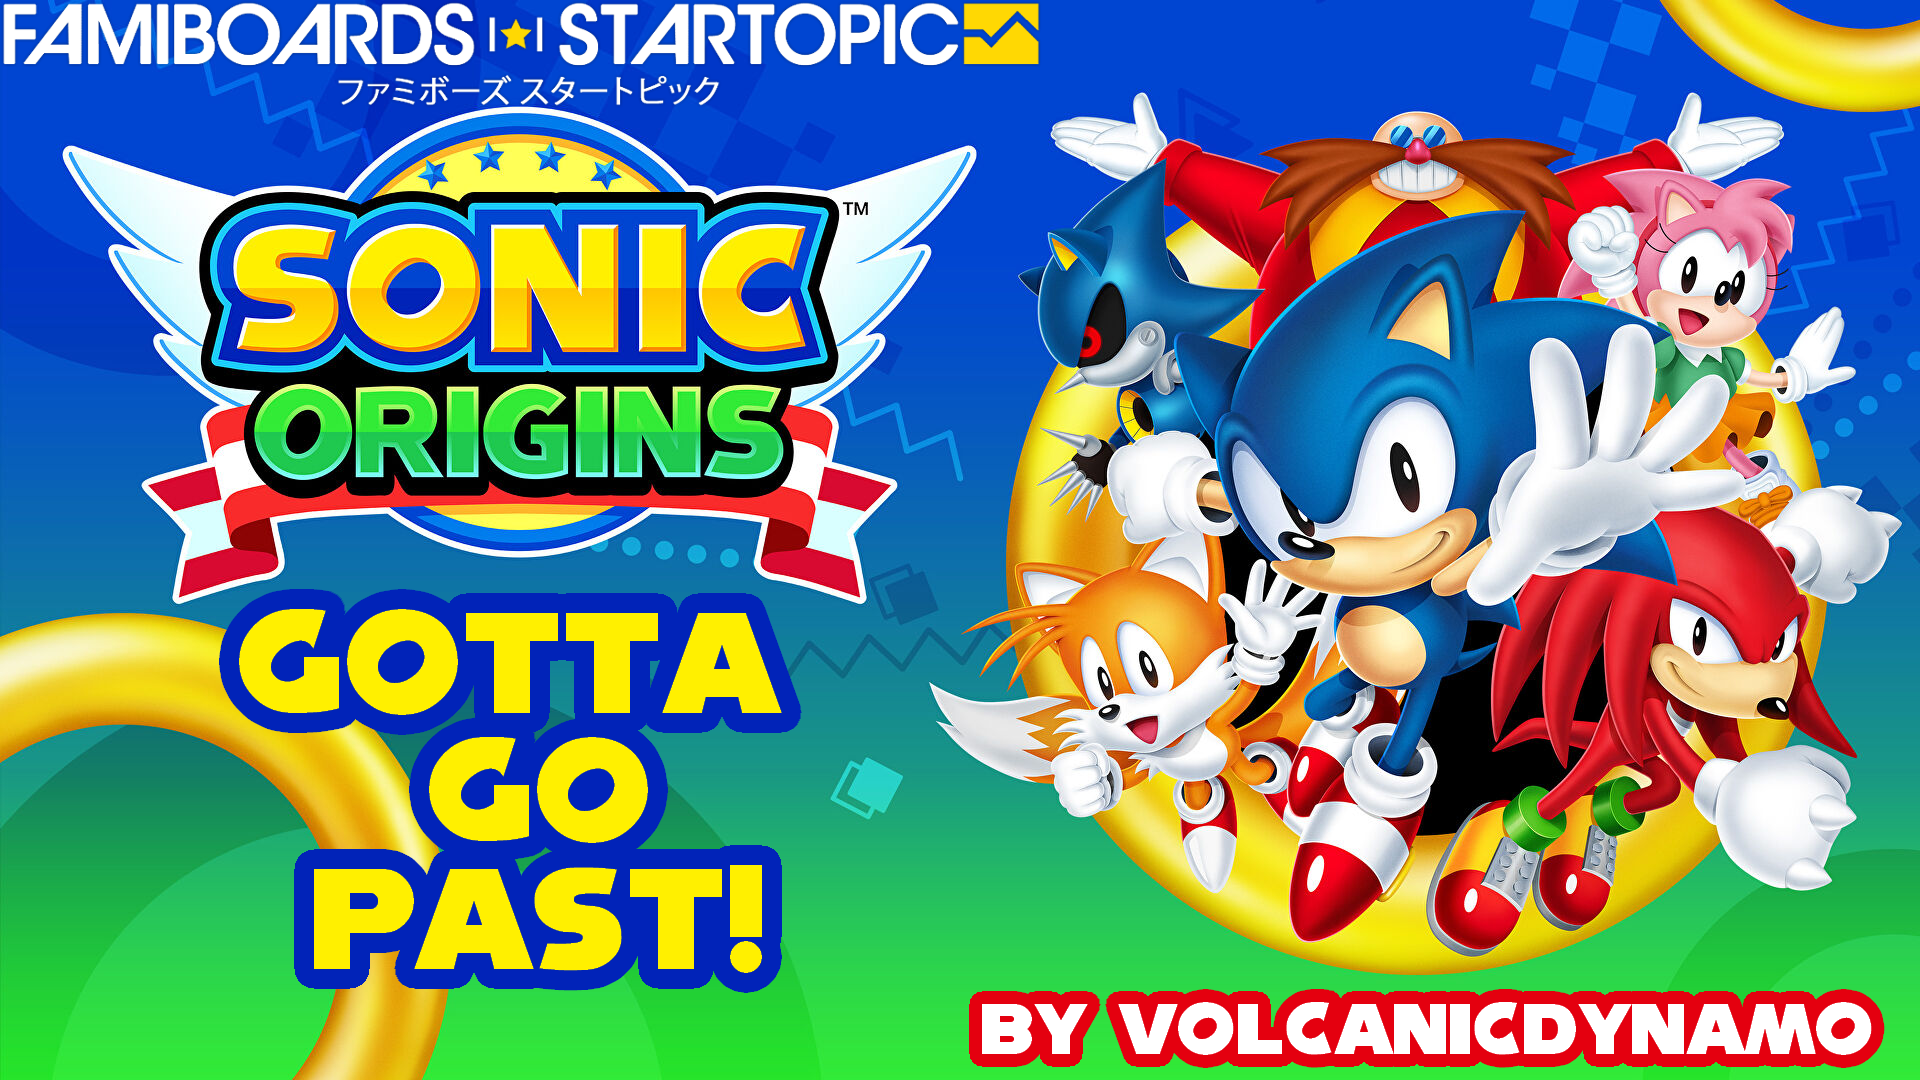 Sonic Origins |ST| Gotta Go Past! By VolcanicDynamo